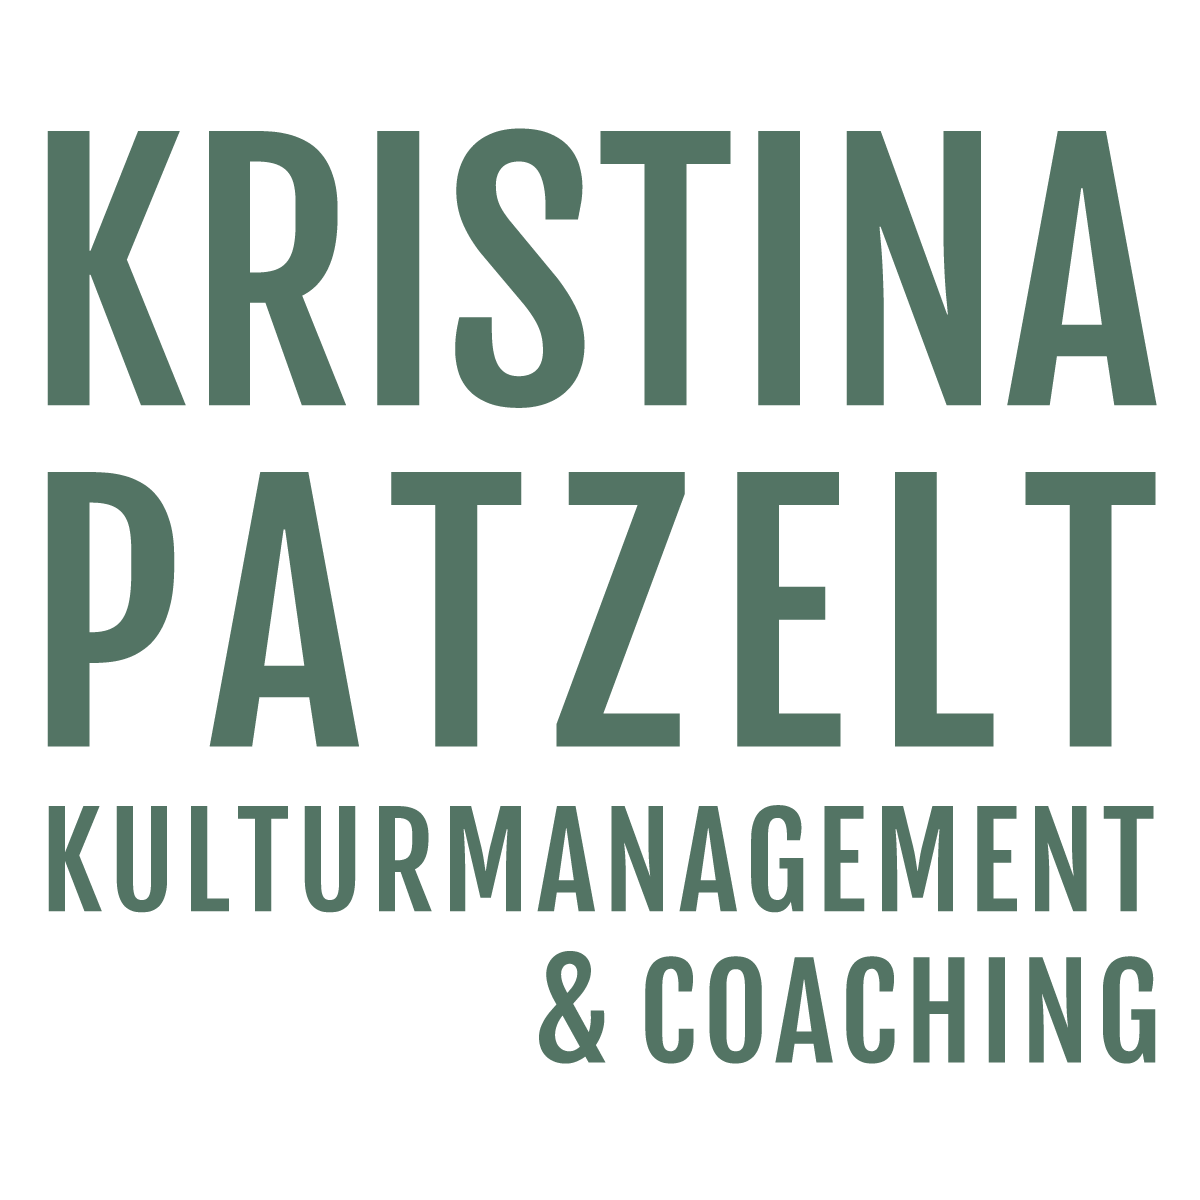 Kristina Patzelt (KP) - Cultural management & Coaching